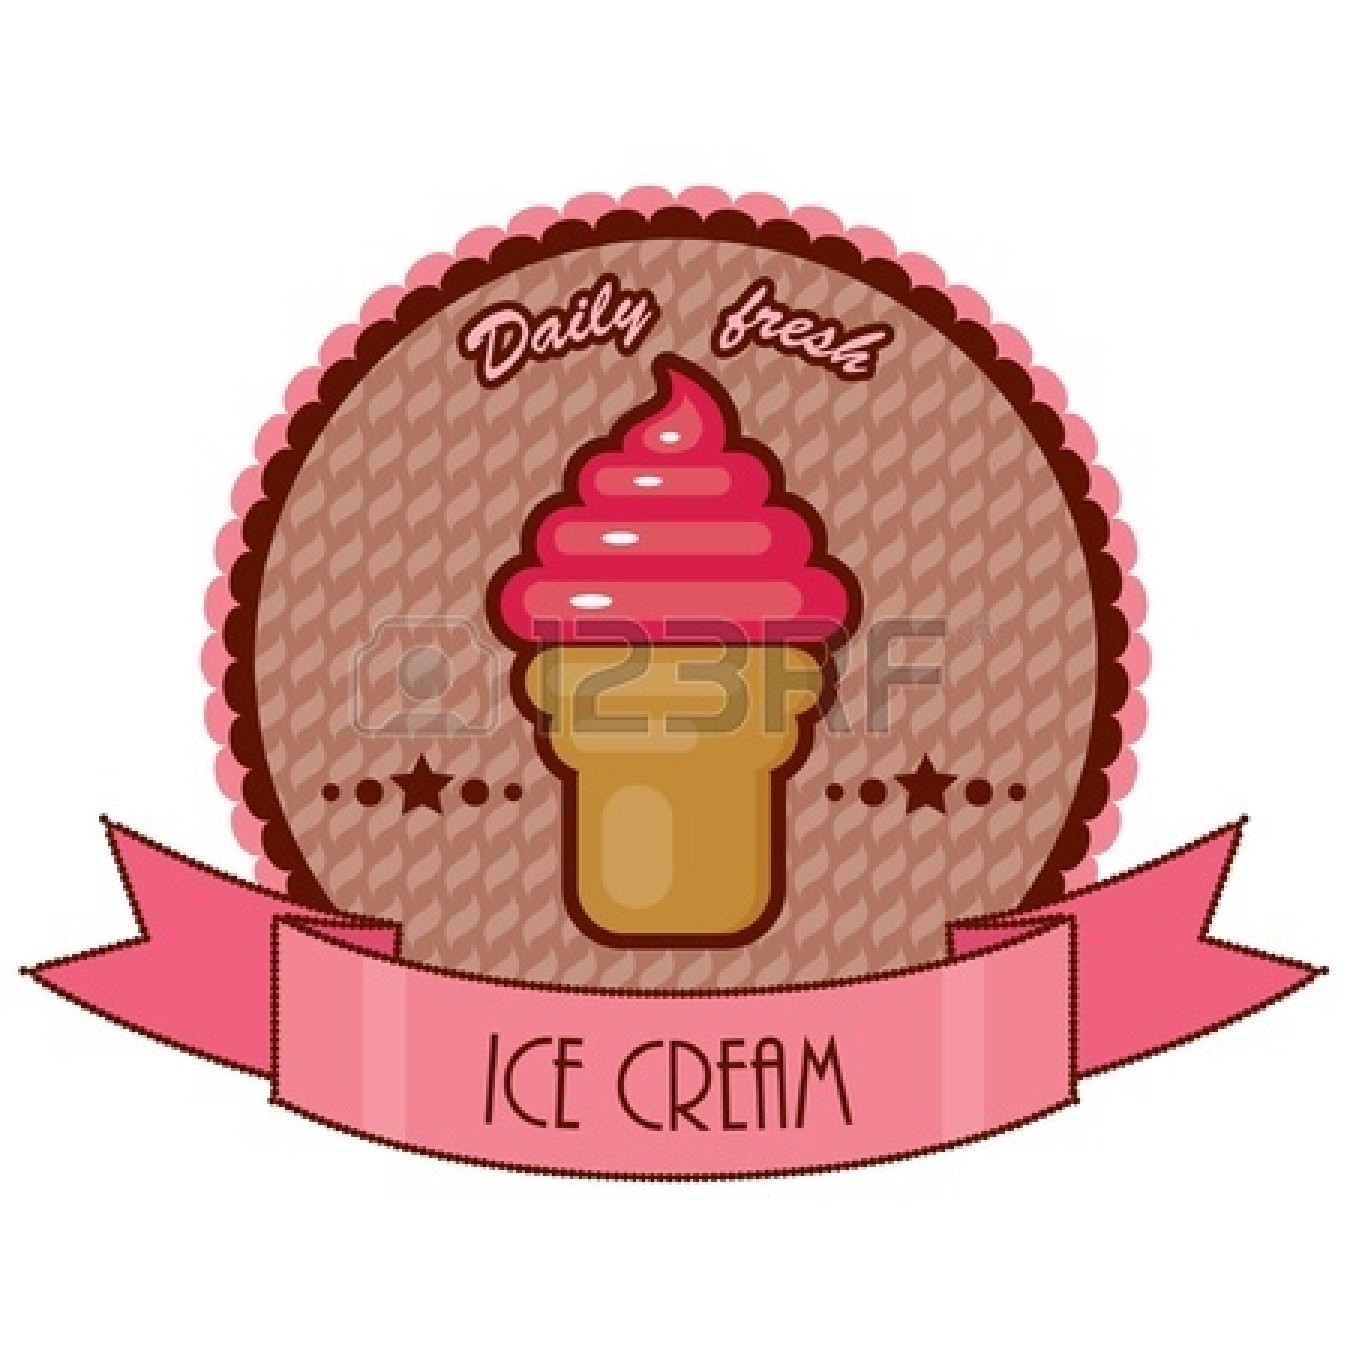 Ice Cream Sundae With Sprinkles 15527340 Retro Emblem With Ice Cream